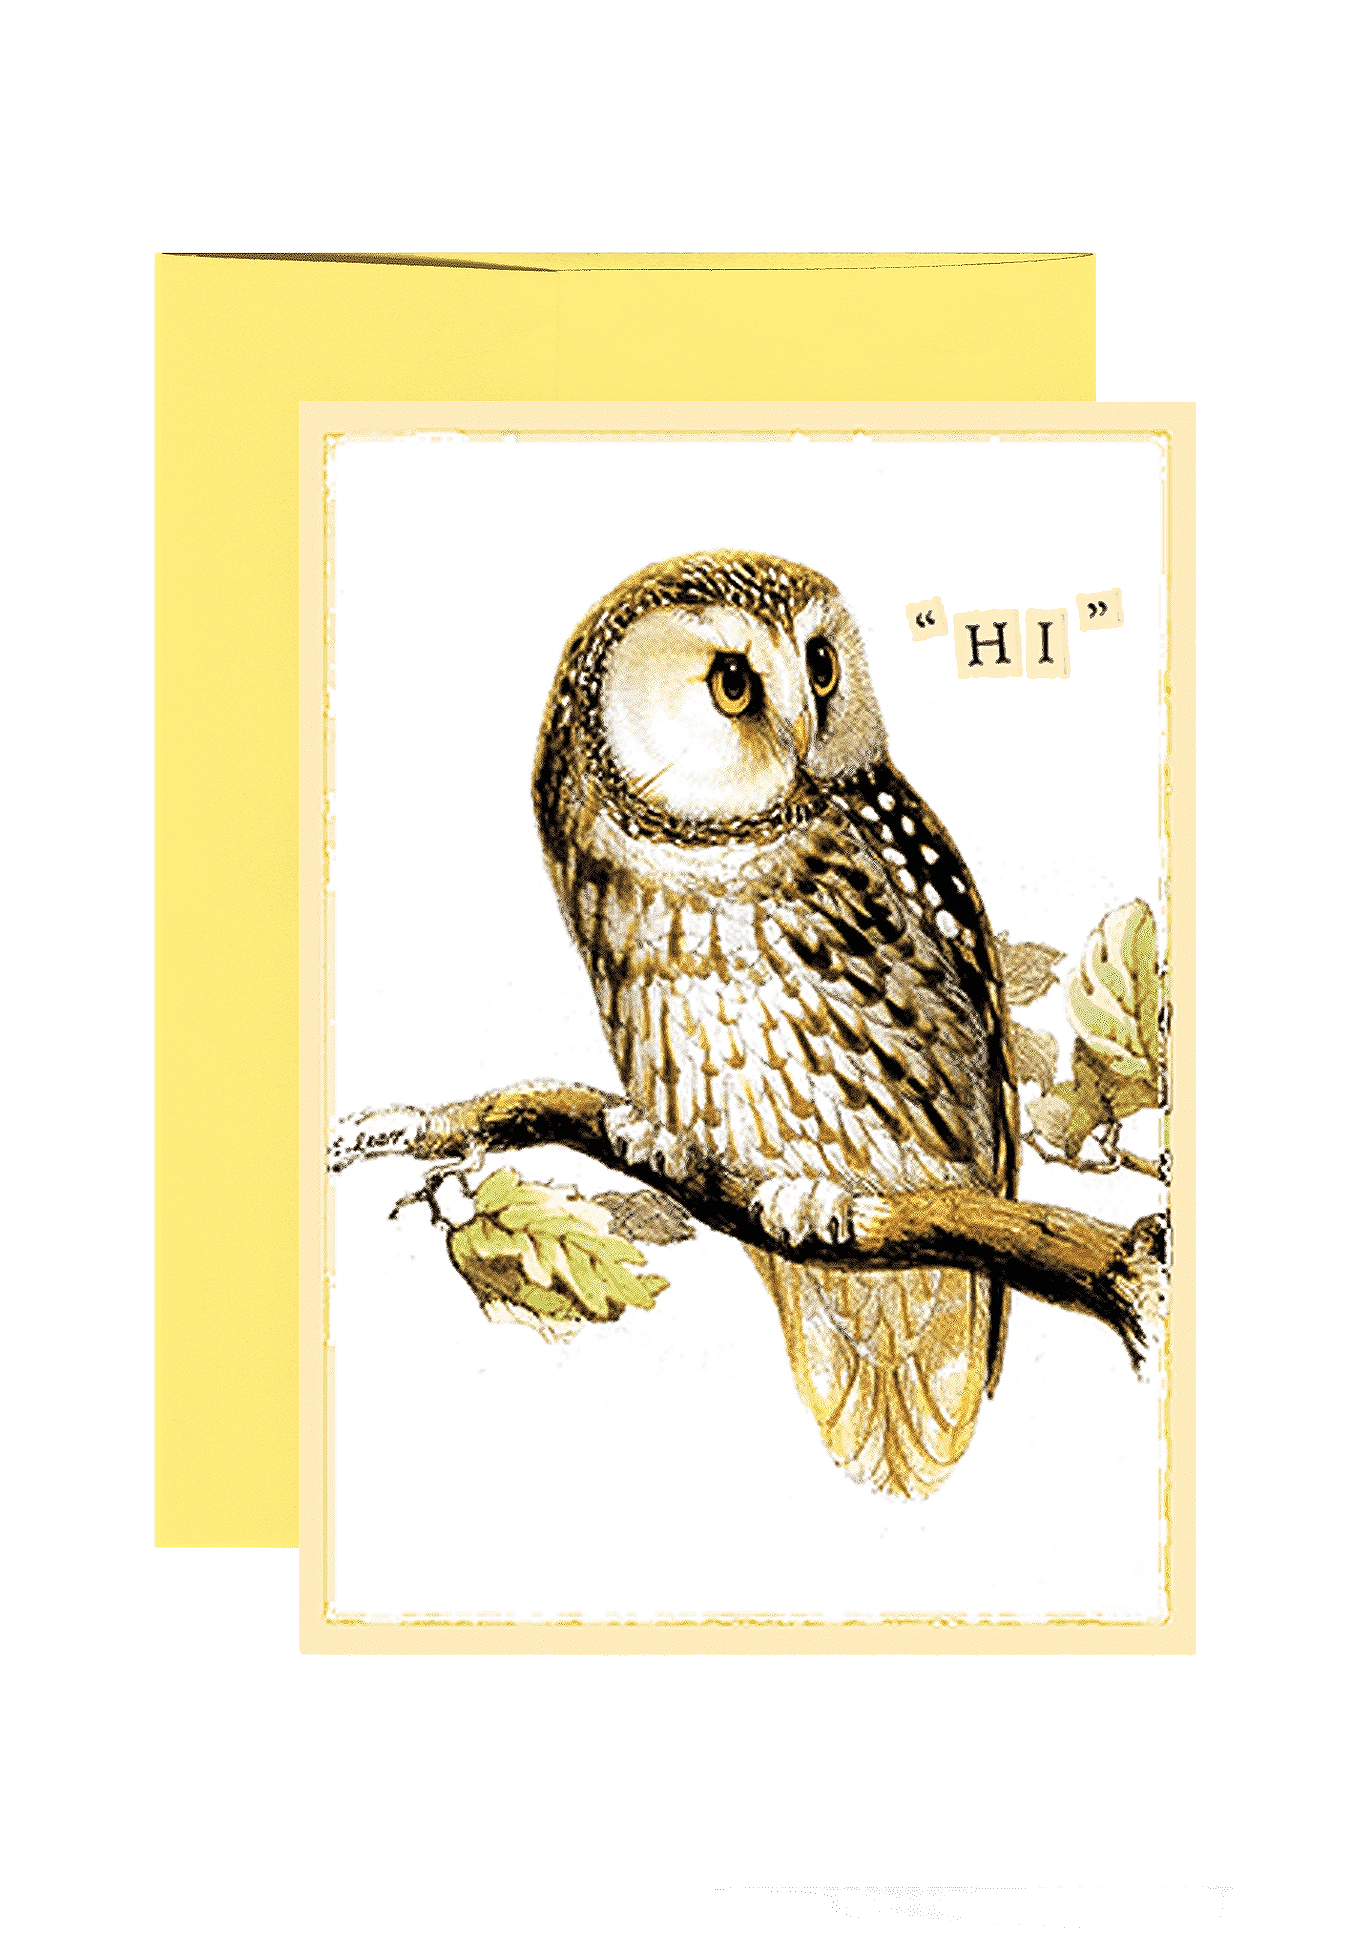 Bensgarden.com | Hi Owl Folded Greeting Card - Ben's Garden. Made in New York City.